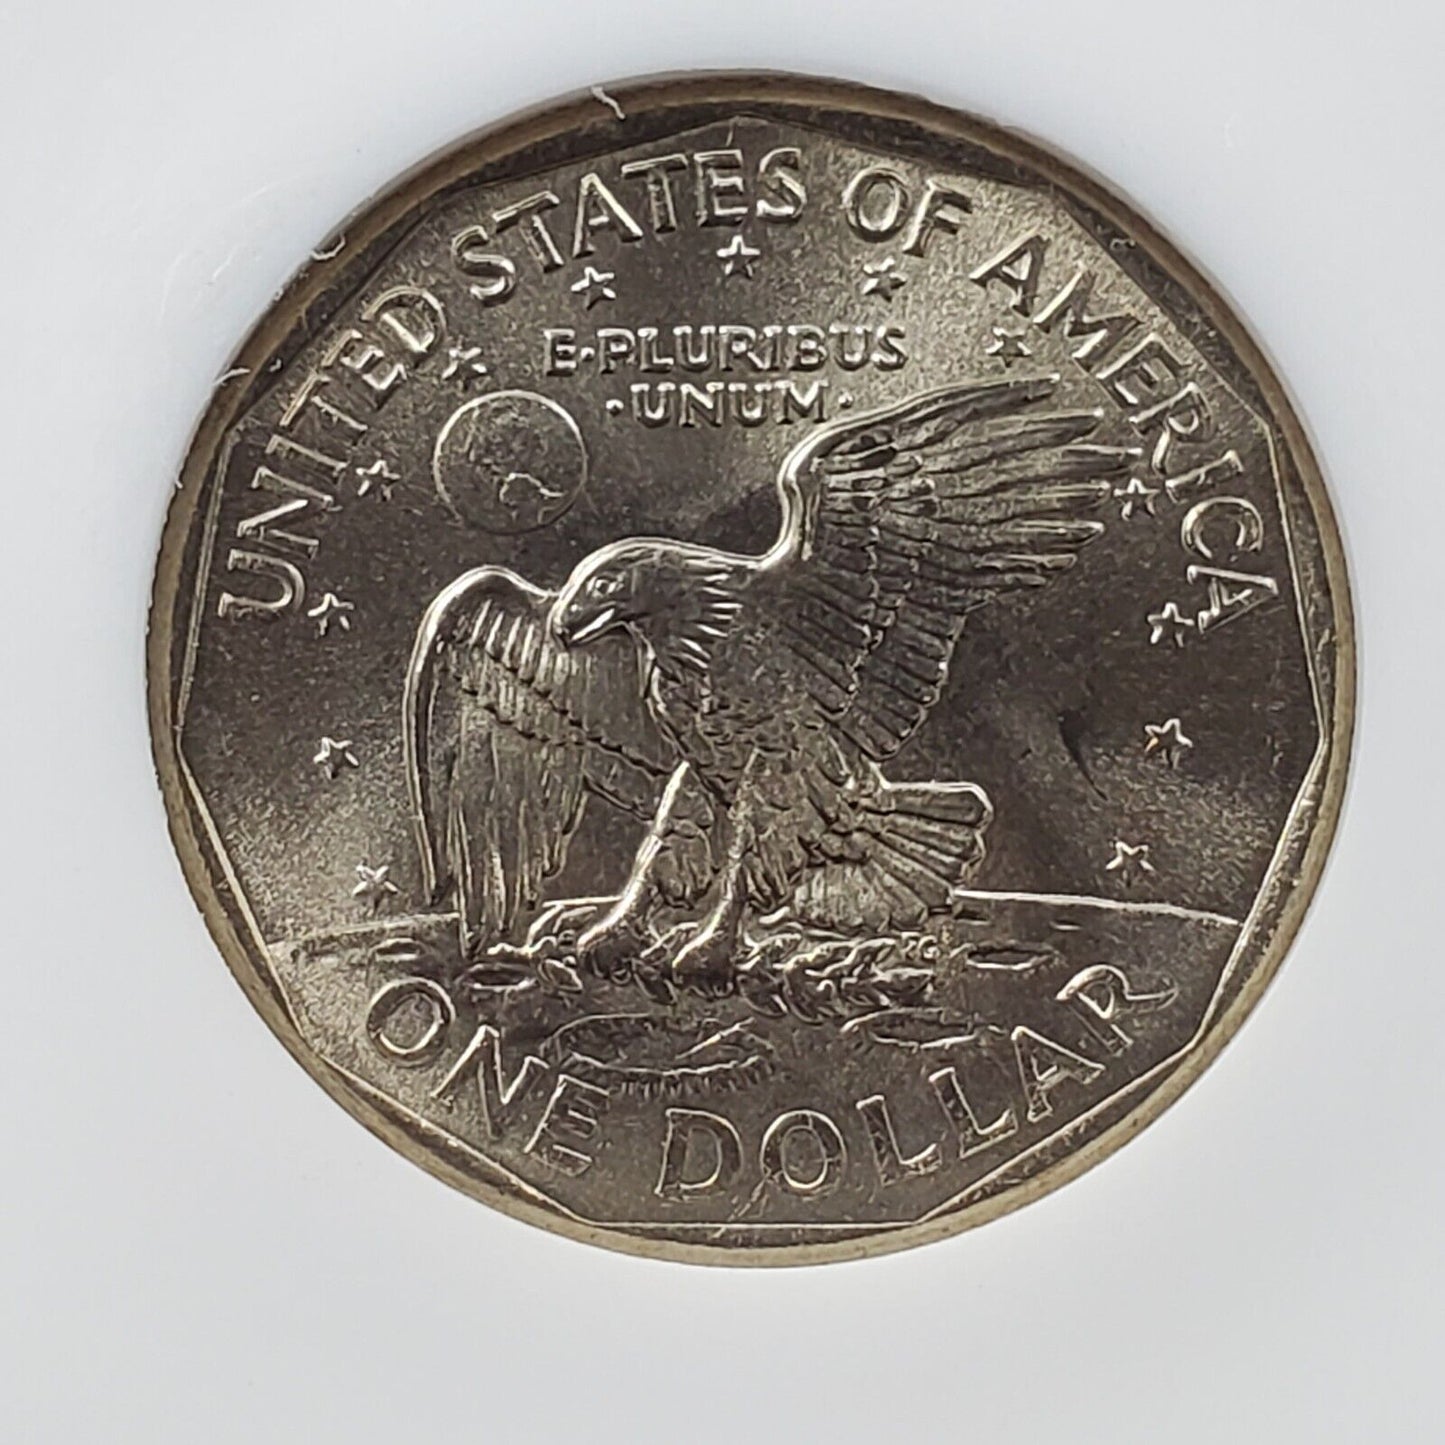 1999 D SBA $1 Susan B Anthony Small Size Dollar Coin NGC MS67 GEM BU Certified